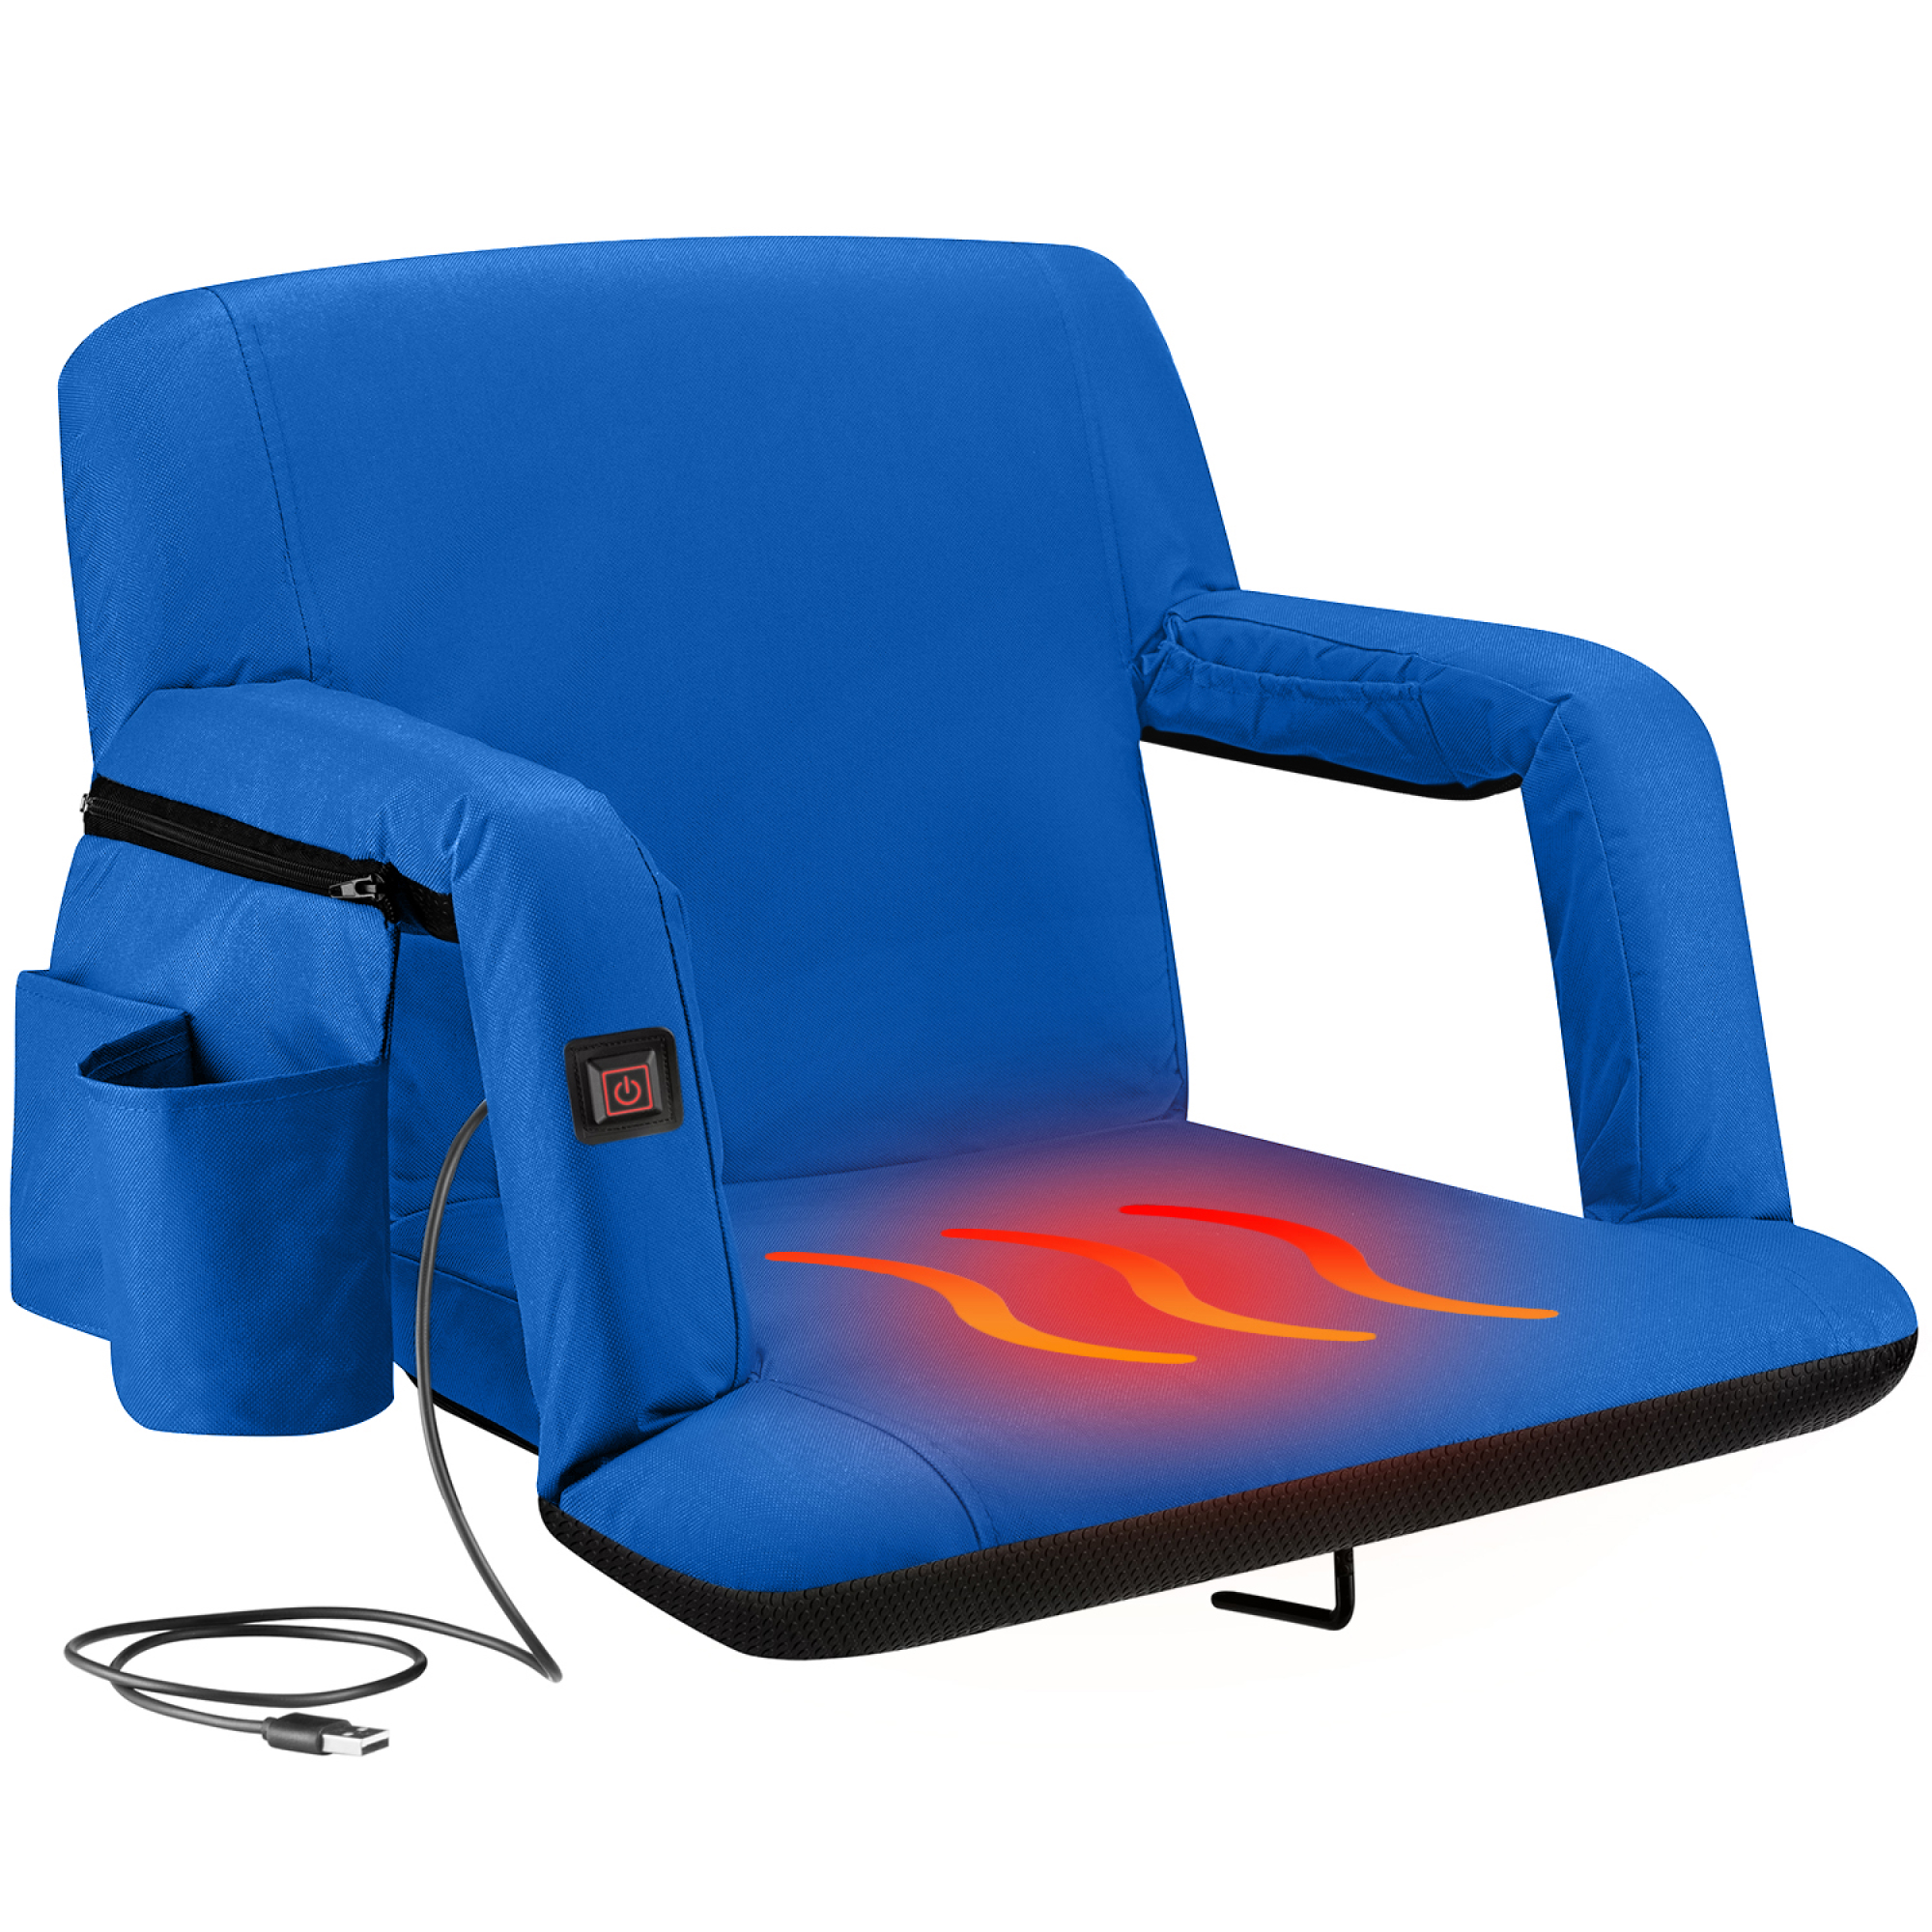 Best Heated Stadium Seats, Bleacher Chairs cushions-NiceC